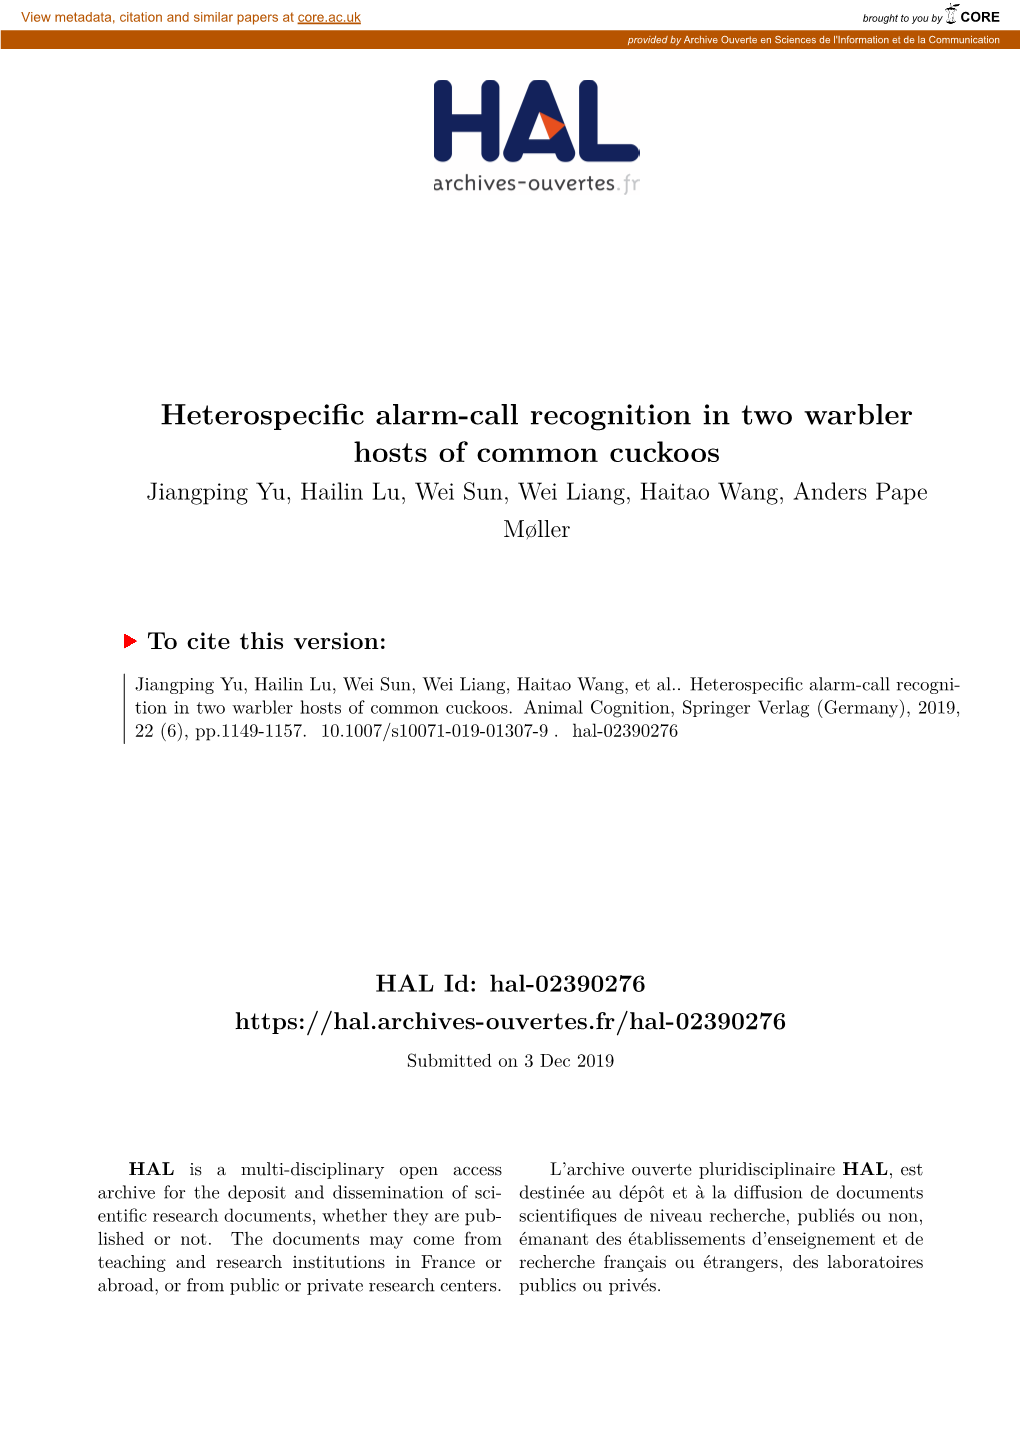 Heterospecific Alarm-Call Recognition in Two Warbler Hosts of Common Cuckoos Jiangping Yu, Hailin Lu, Wei Sun, Wei Liang, Haitao Wang, Anders Pape Møller